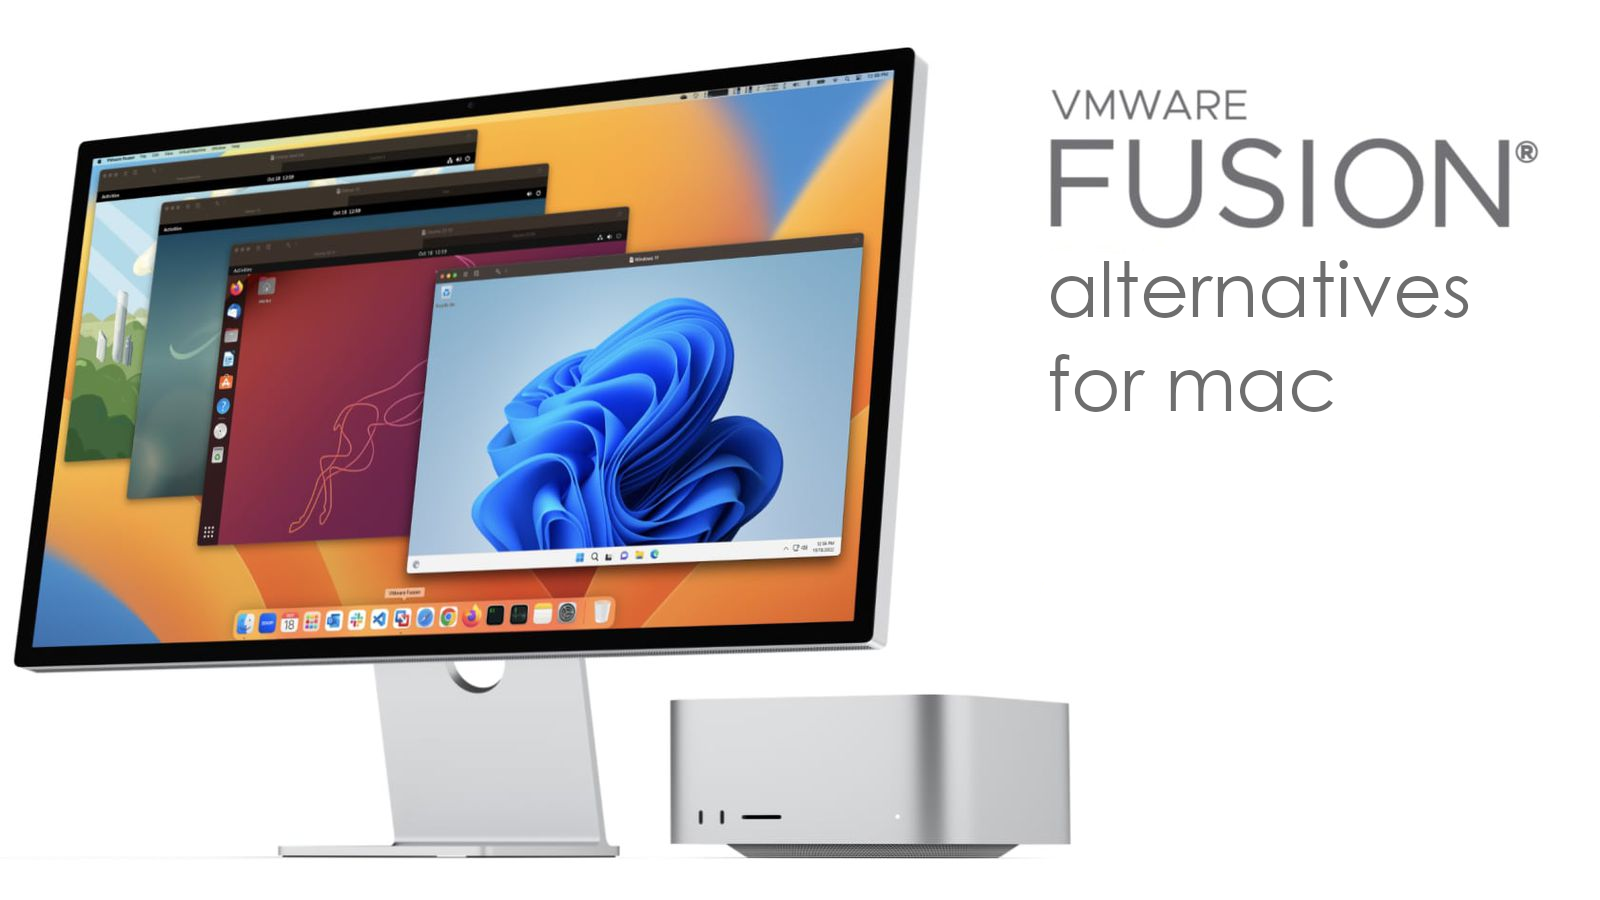 vmware fusion alternatives for mac